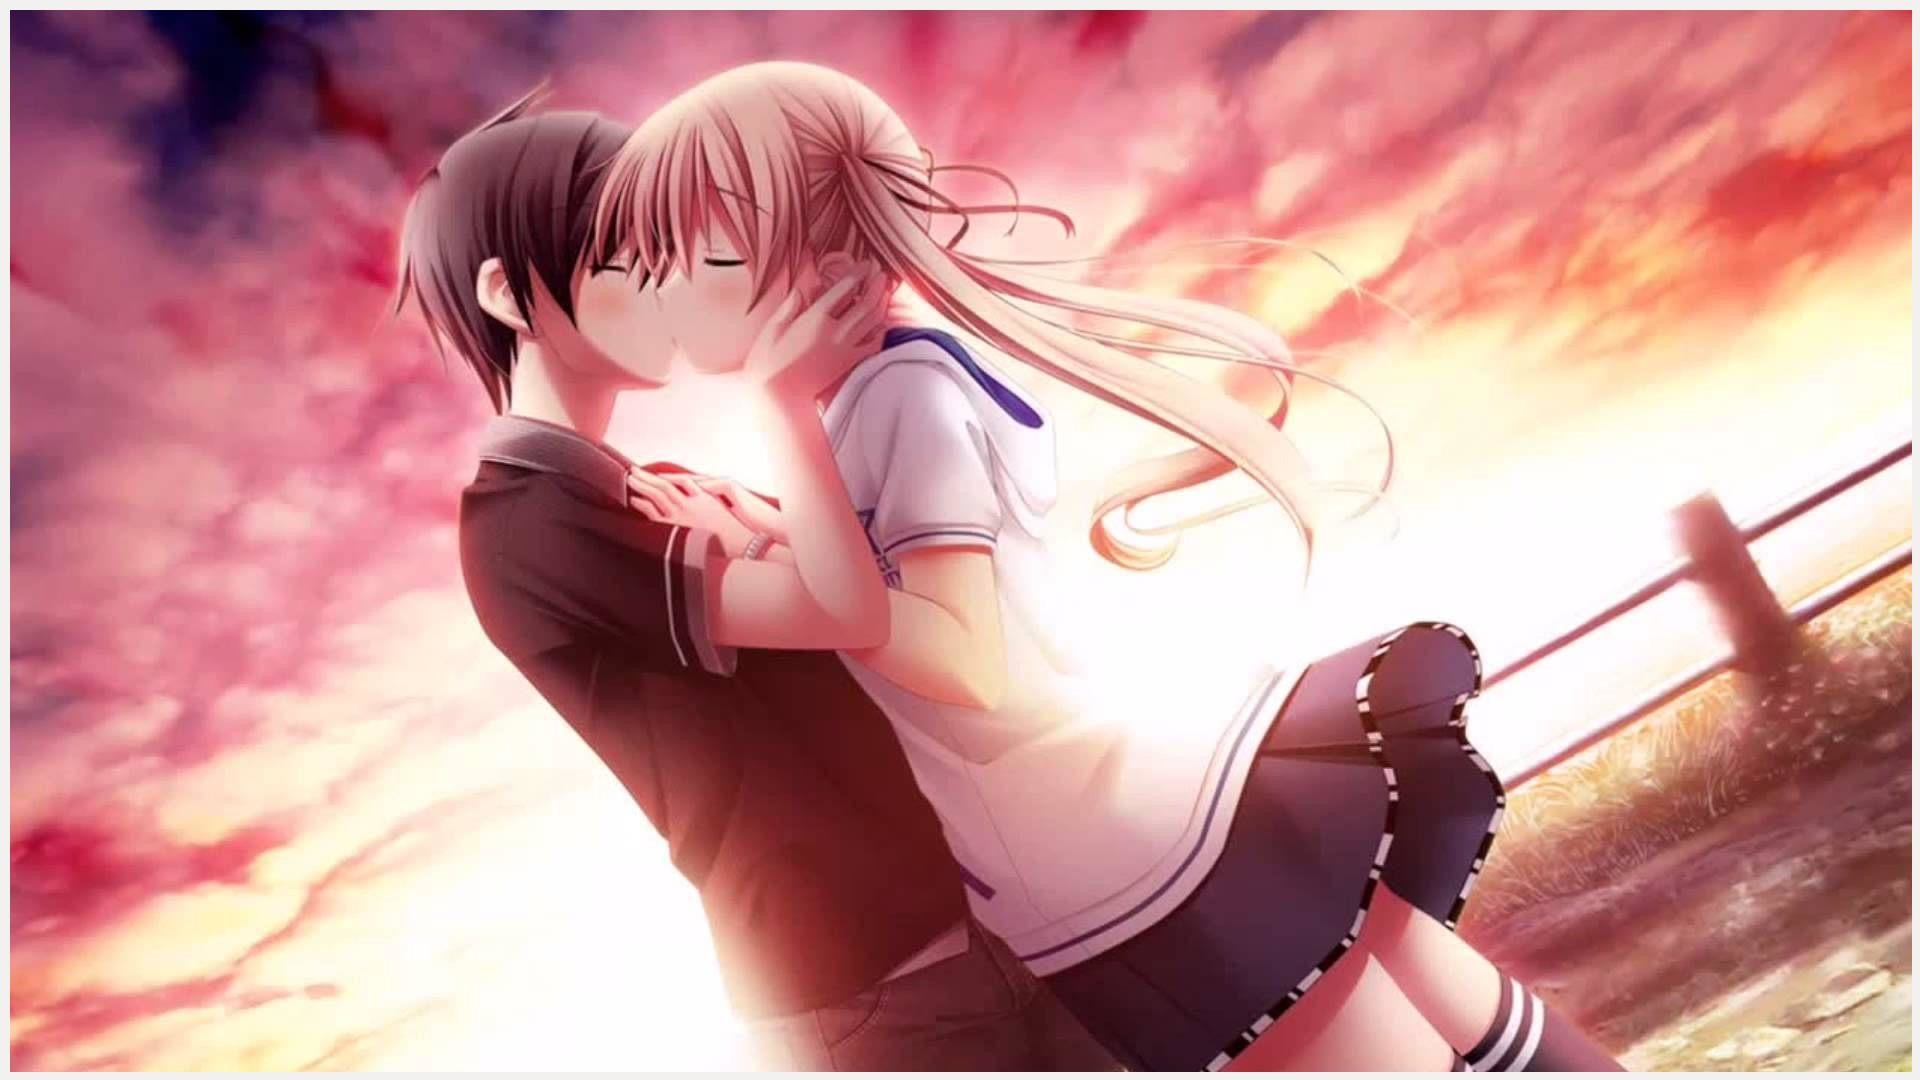 1920x1080 Love Kiss Of Cute Anime Couple Wallpaper | Decocurbs.com ~ Amazing .